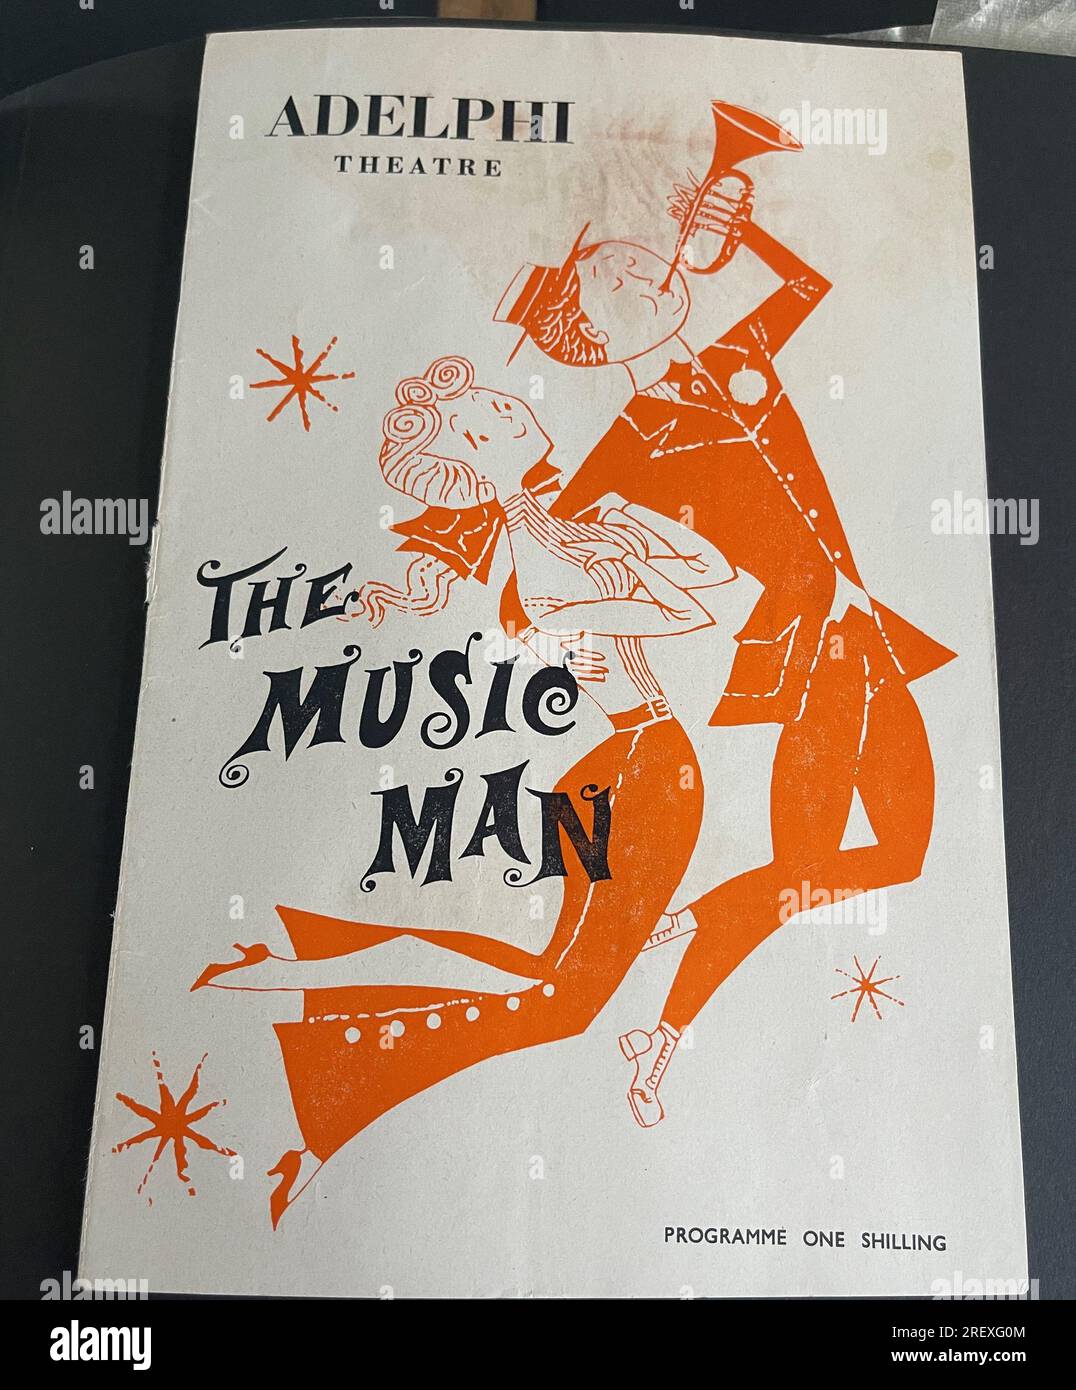 Vintage-Flyer von The Music man, Adelphi Theatre, 1961. Stockfoto